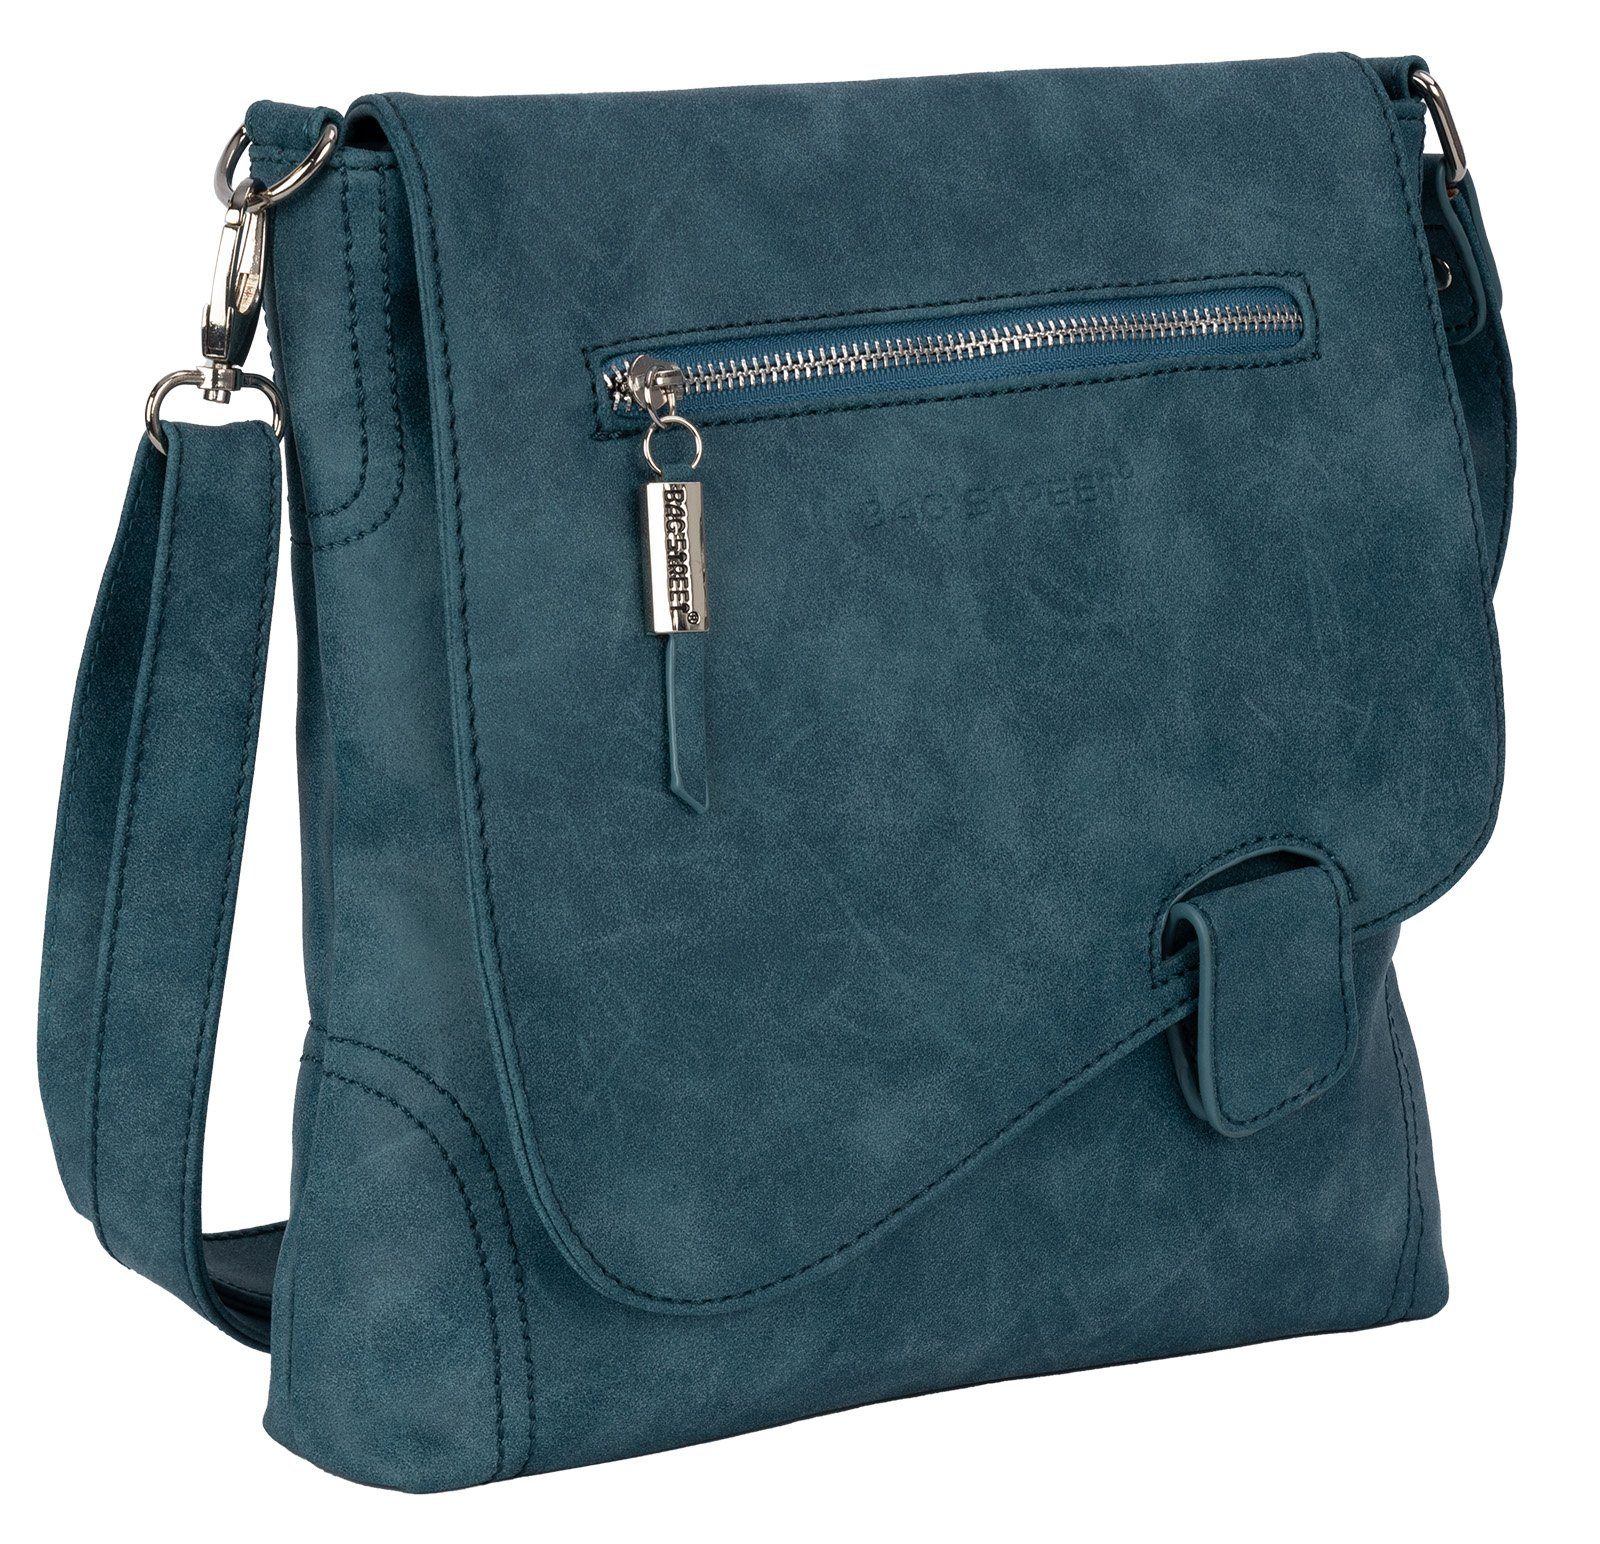 BAG STREET Schlüsseltasche Bag Street Damentasche Umhängetasche Handtasche Schultertasche T0104, als Schultertasche, Umhängetasche tragbar BLAU